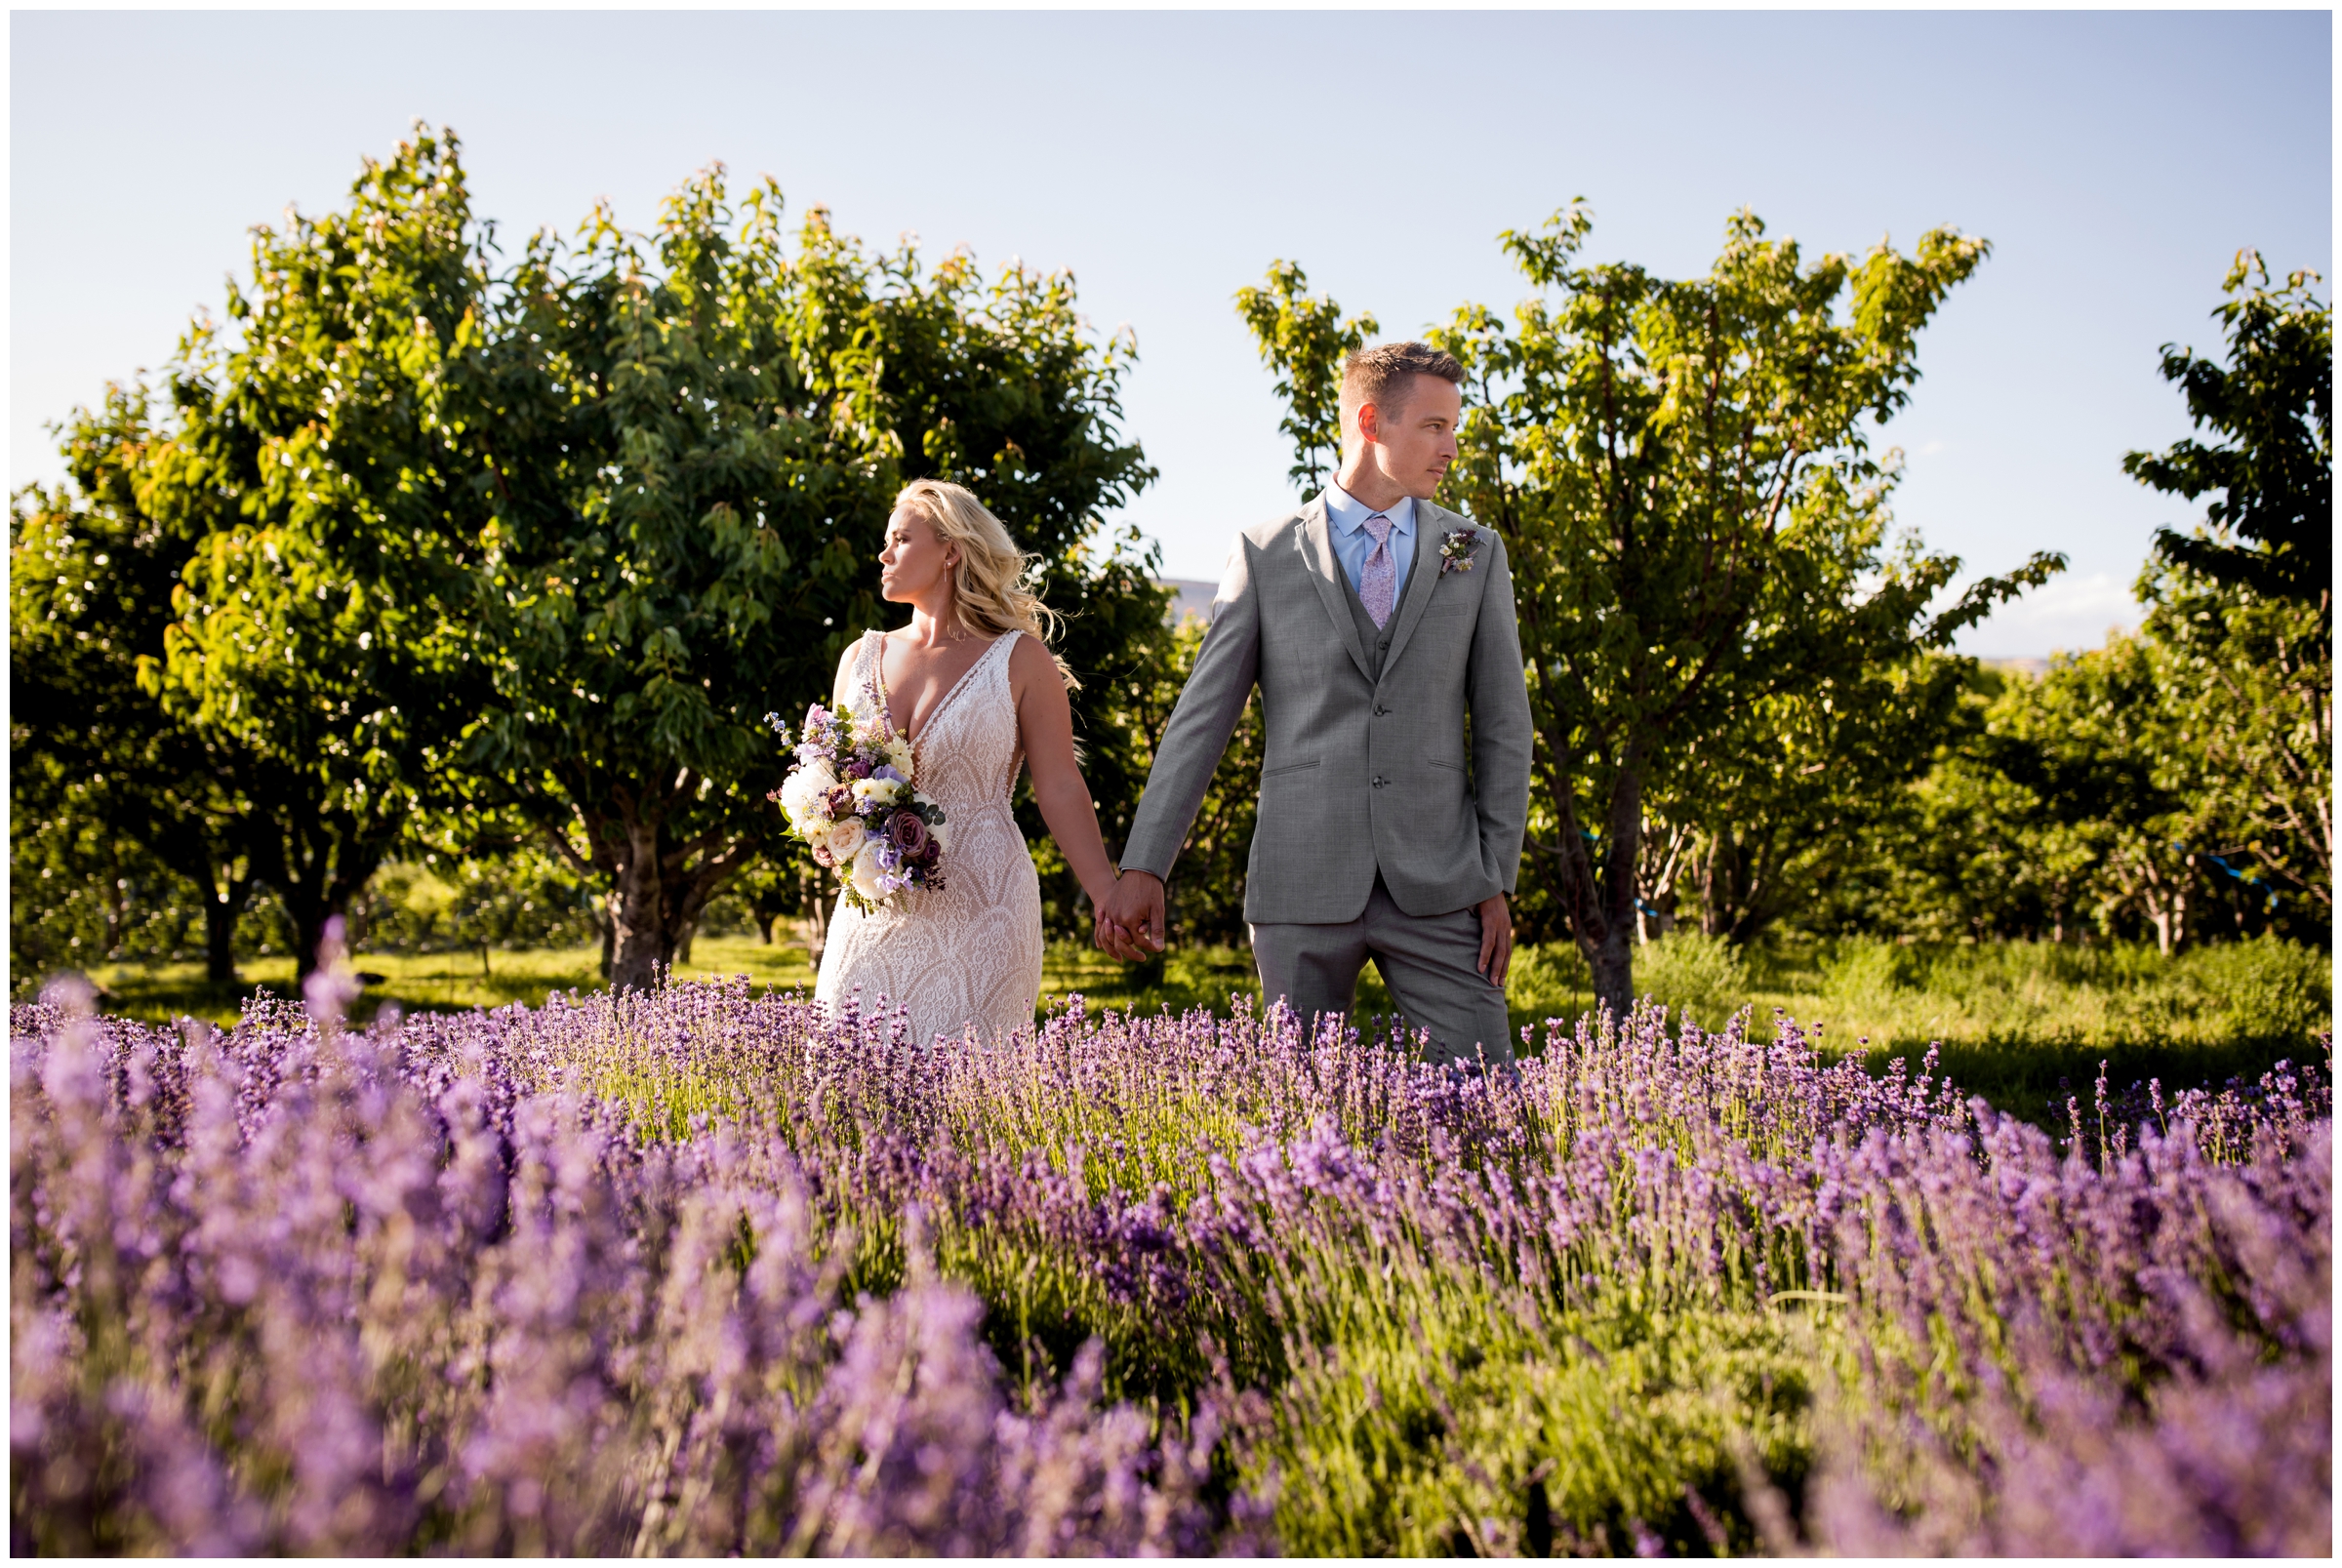 couple posing in flower field during Colorado summer wedding photos 